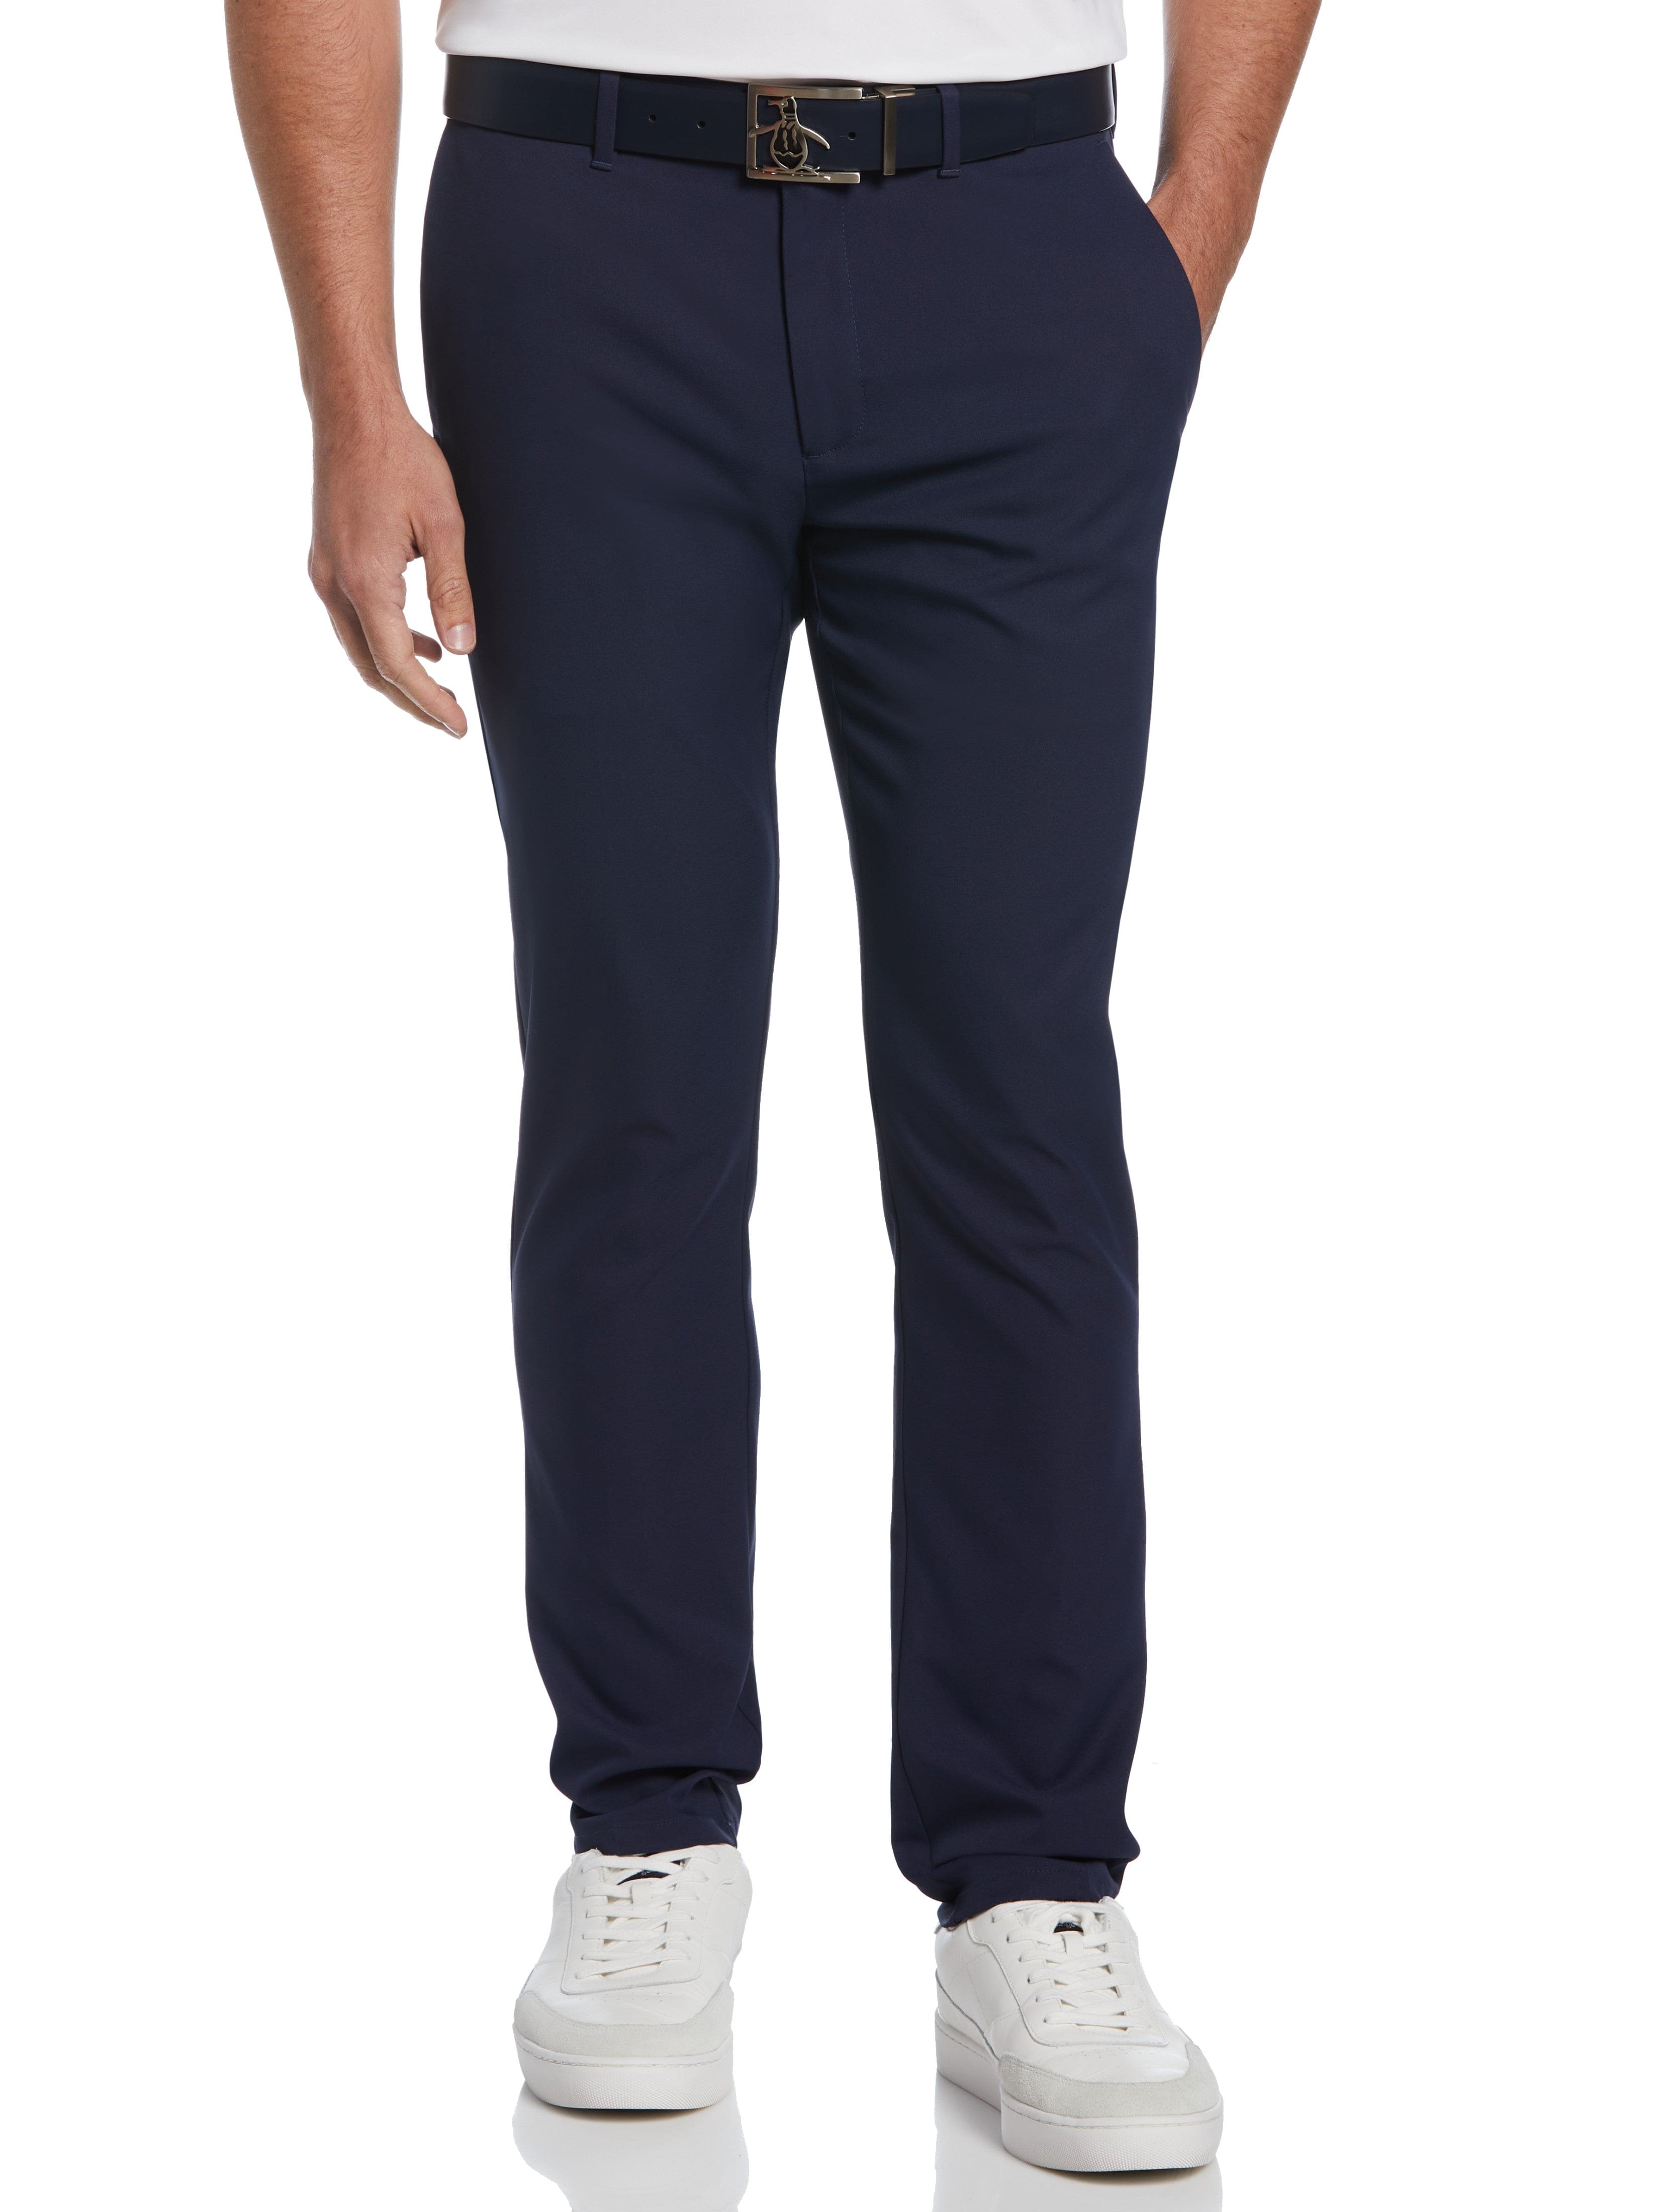 Original Penguin Mens Flat Front Solid Golf Pants, Size 32 x 32, Dark Navy Blue, 100% Polyester | Golf Apparel Shop